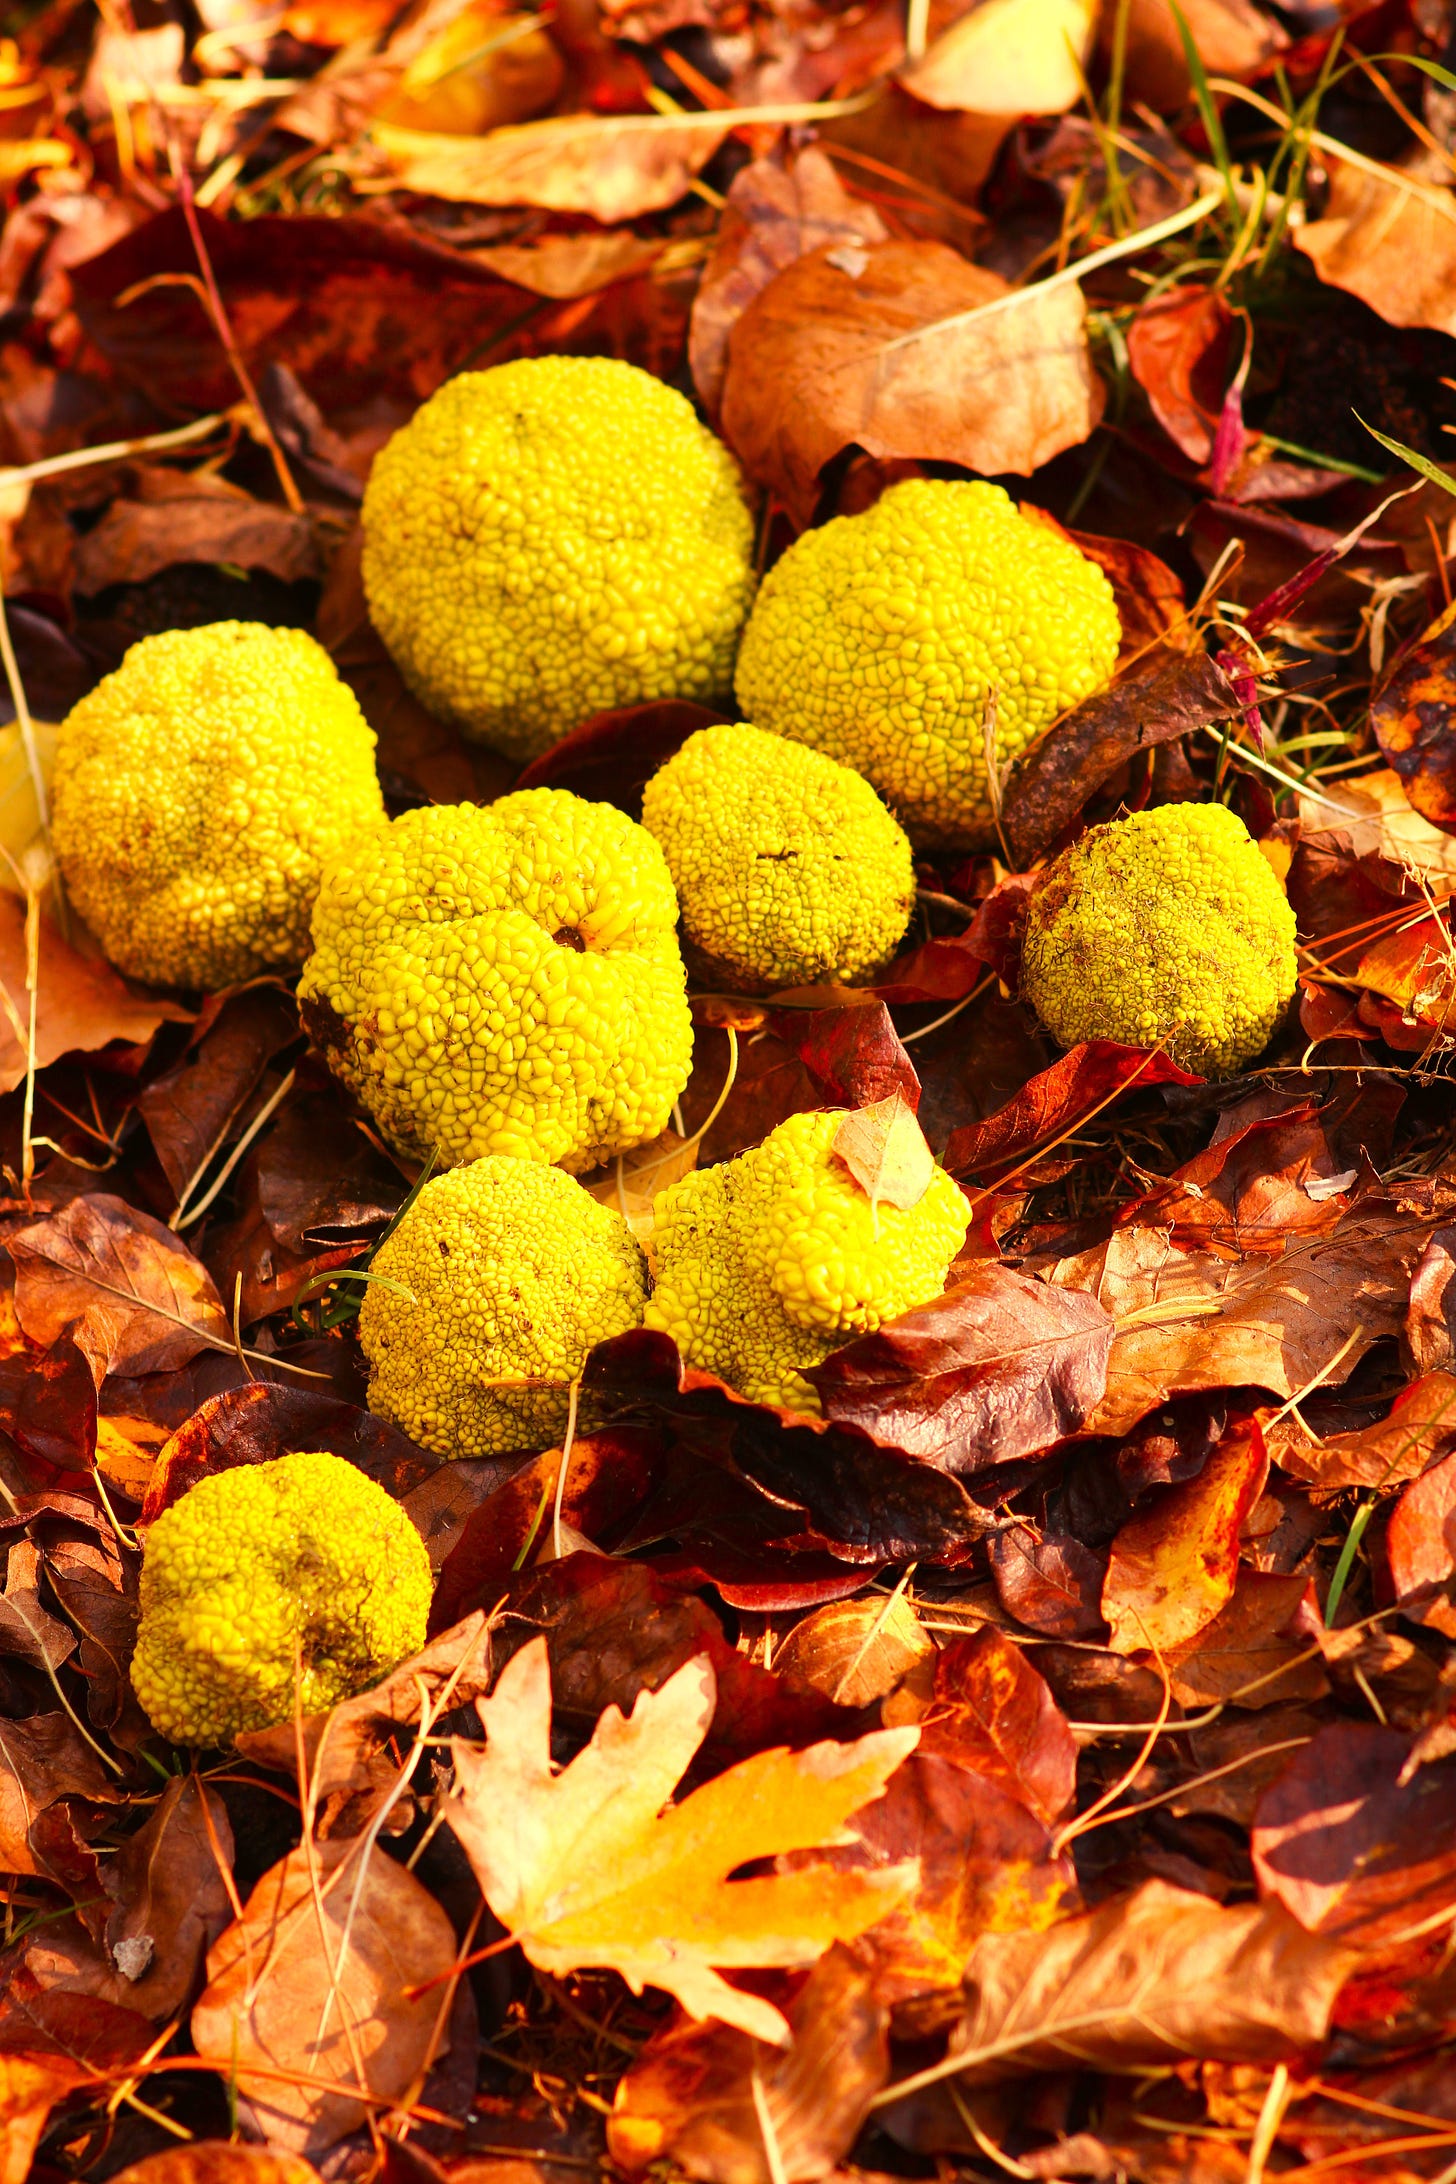 Fall fruit among fallen leaves -osage oranges